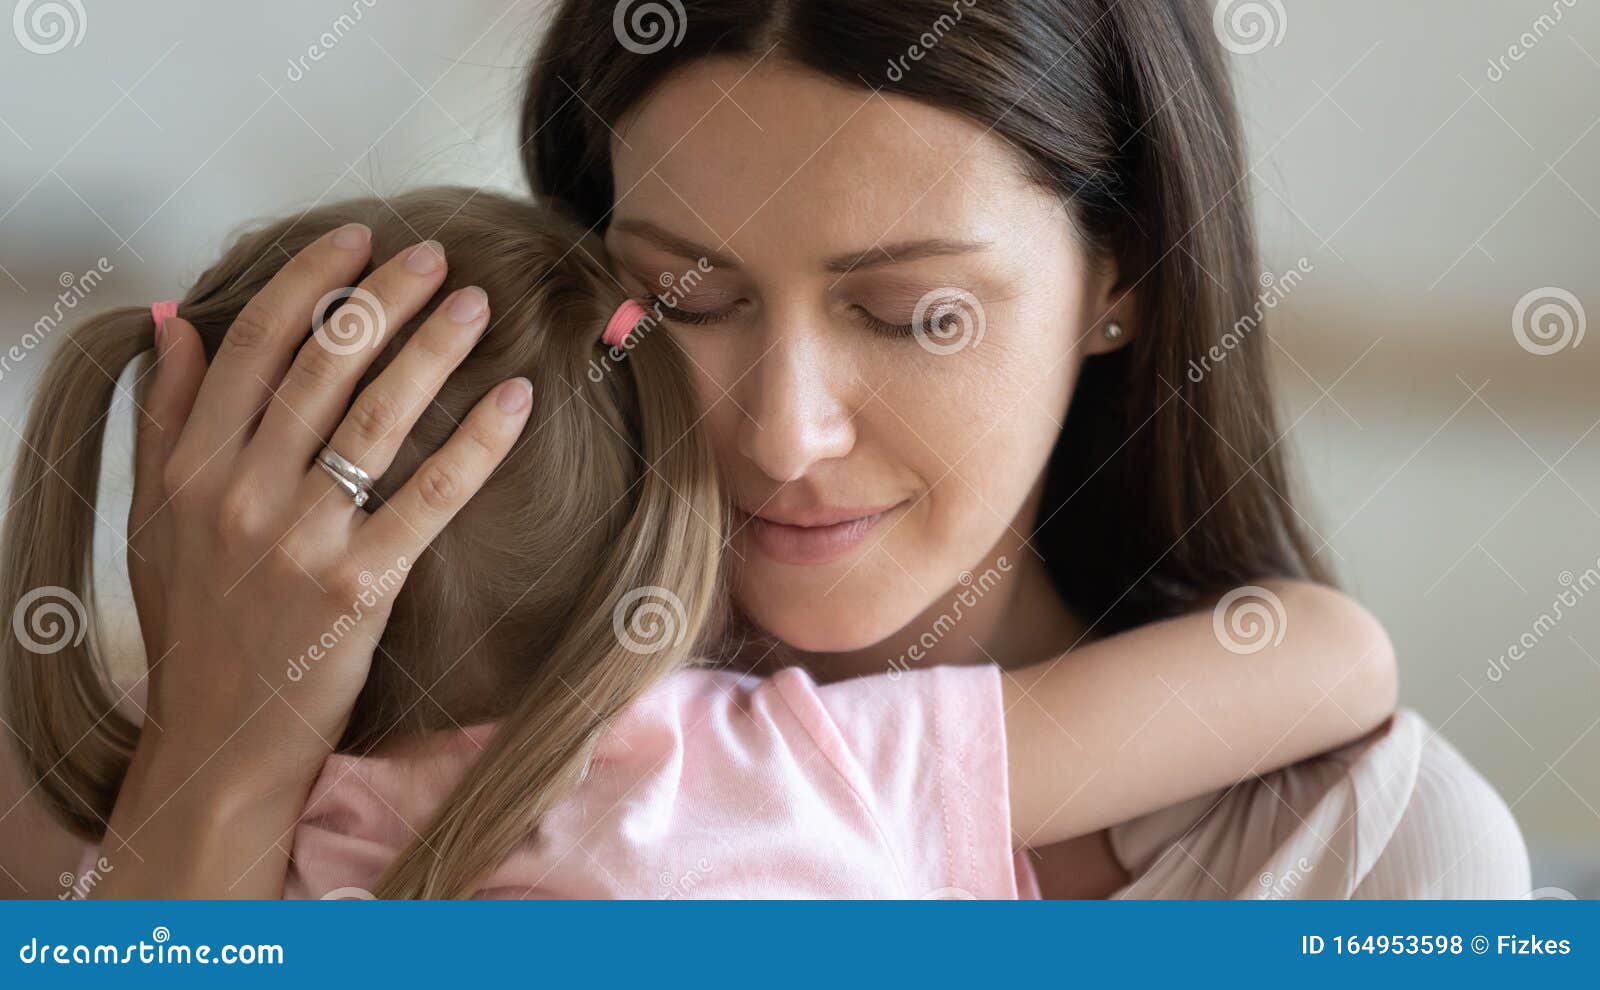 loving foster parent mom hugging little kid daughter giving comfort